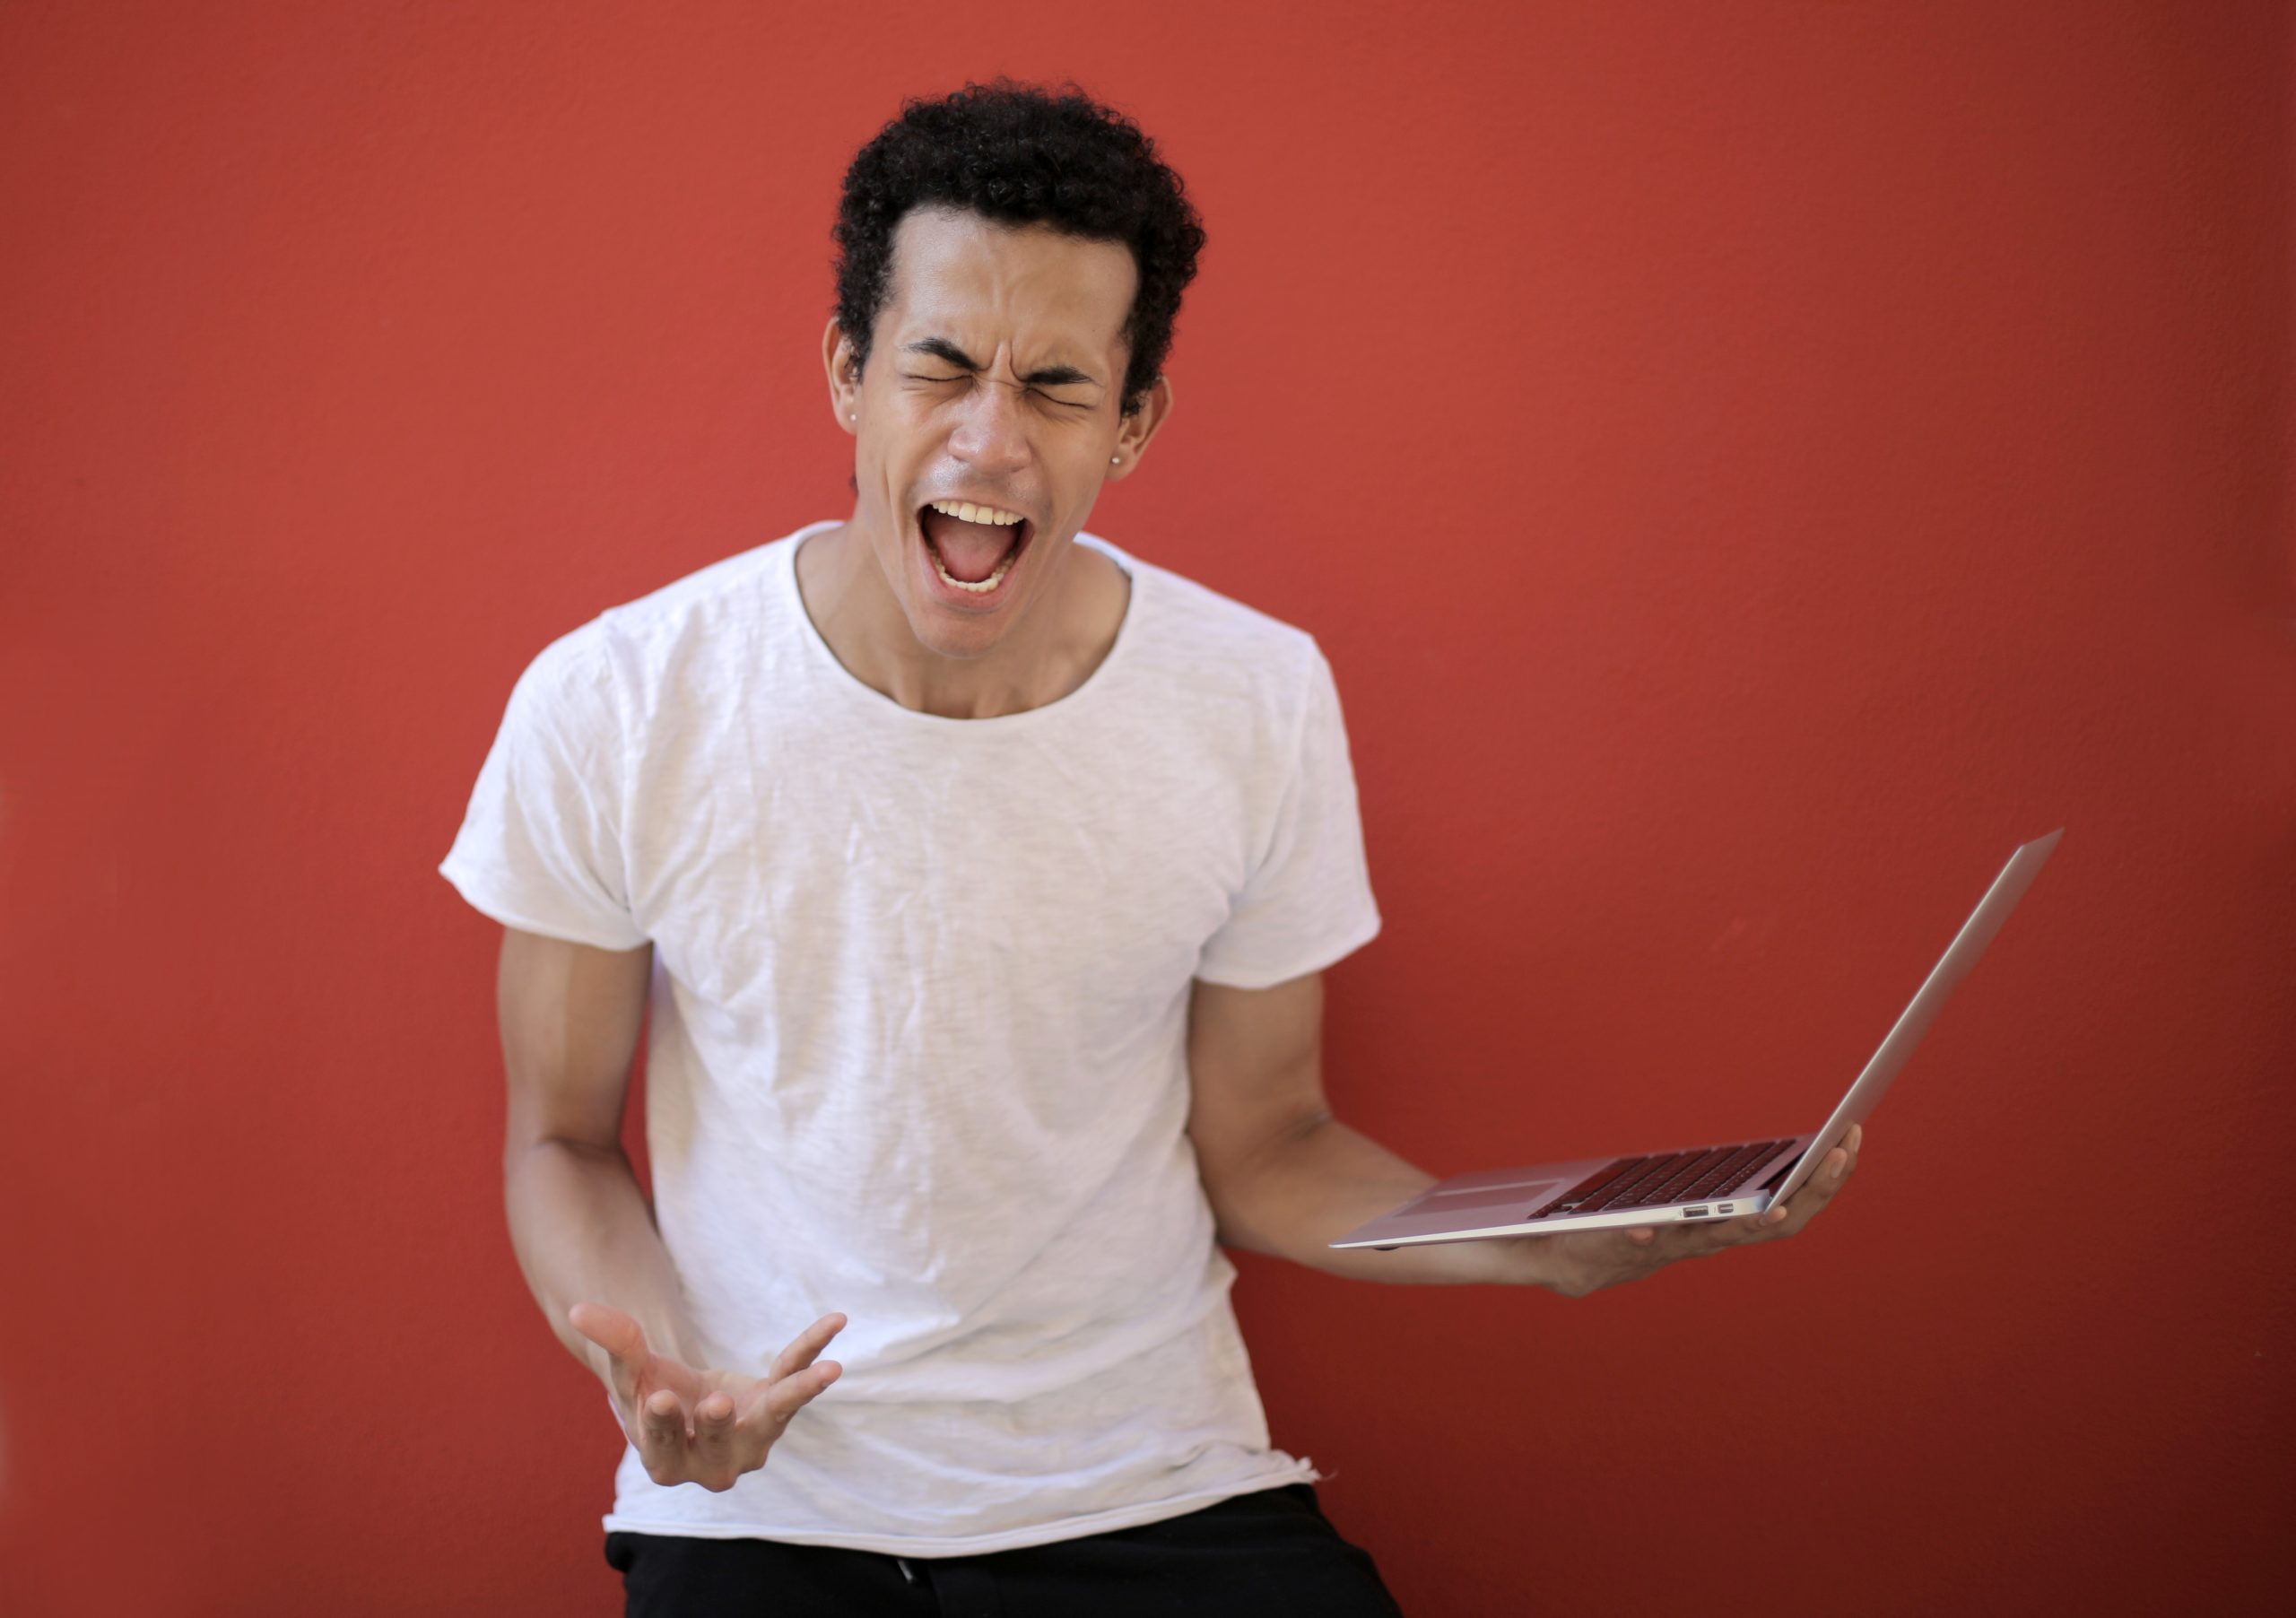 man angry at a laptop